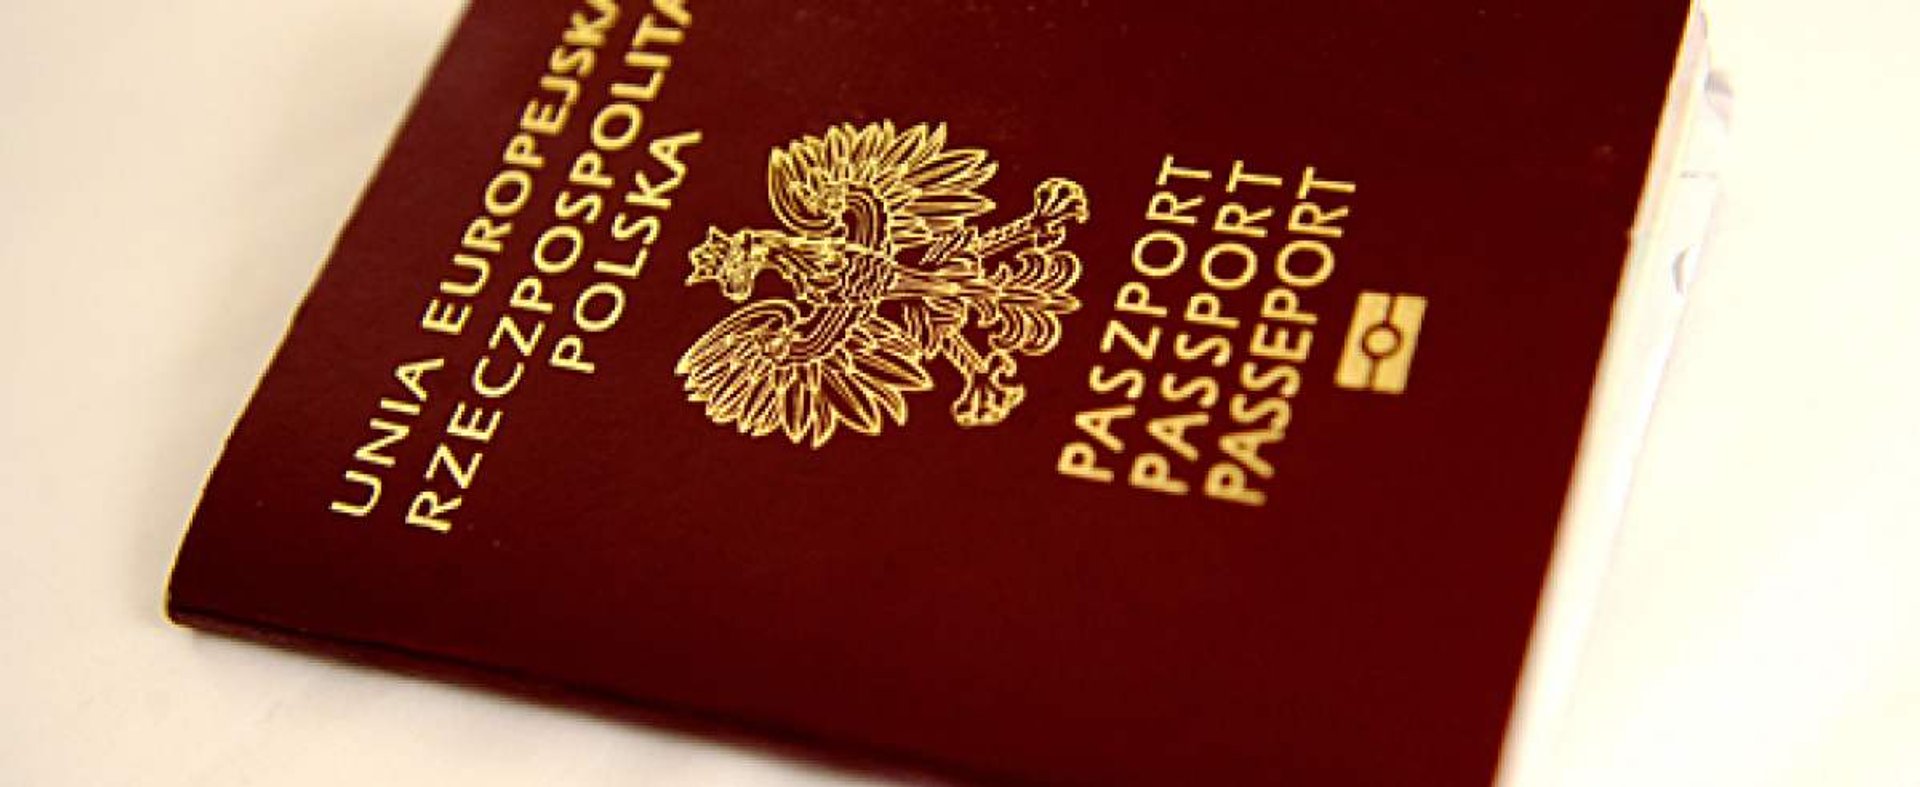 Paszport do UK